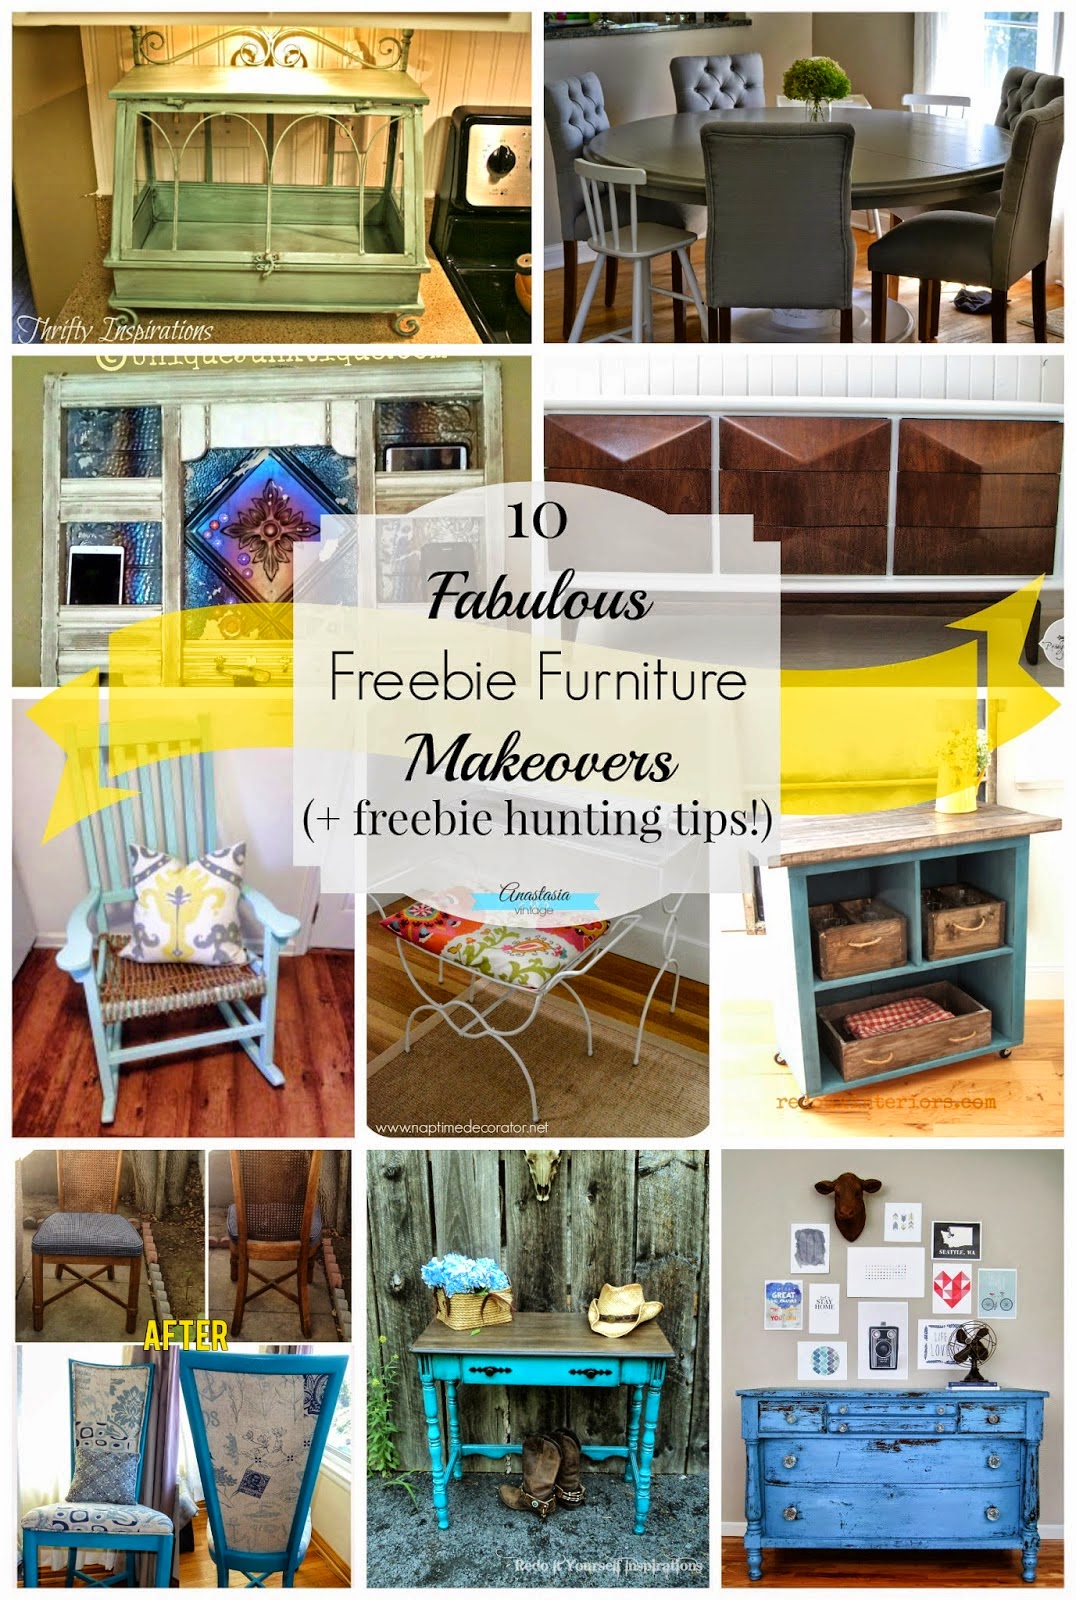 http://anastasiavintagehome.blogspot.ca/2014/11/10-fabulous-freebie-furniture-makeovers.html